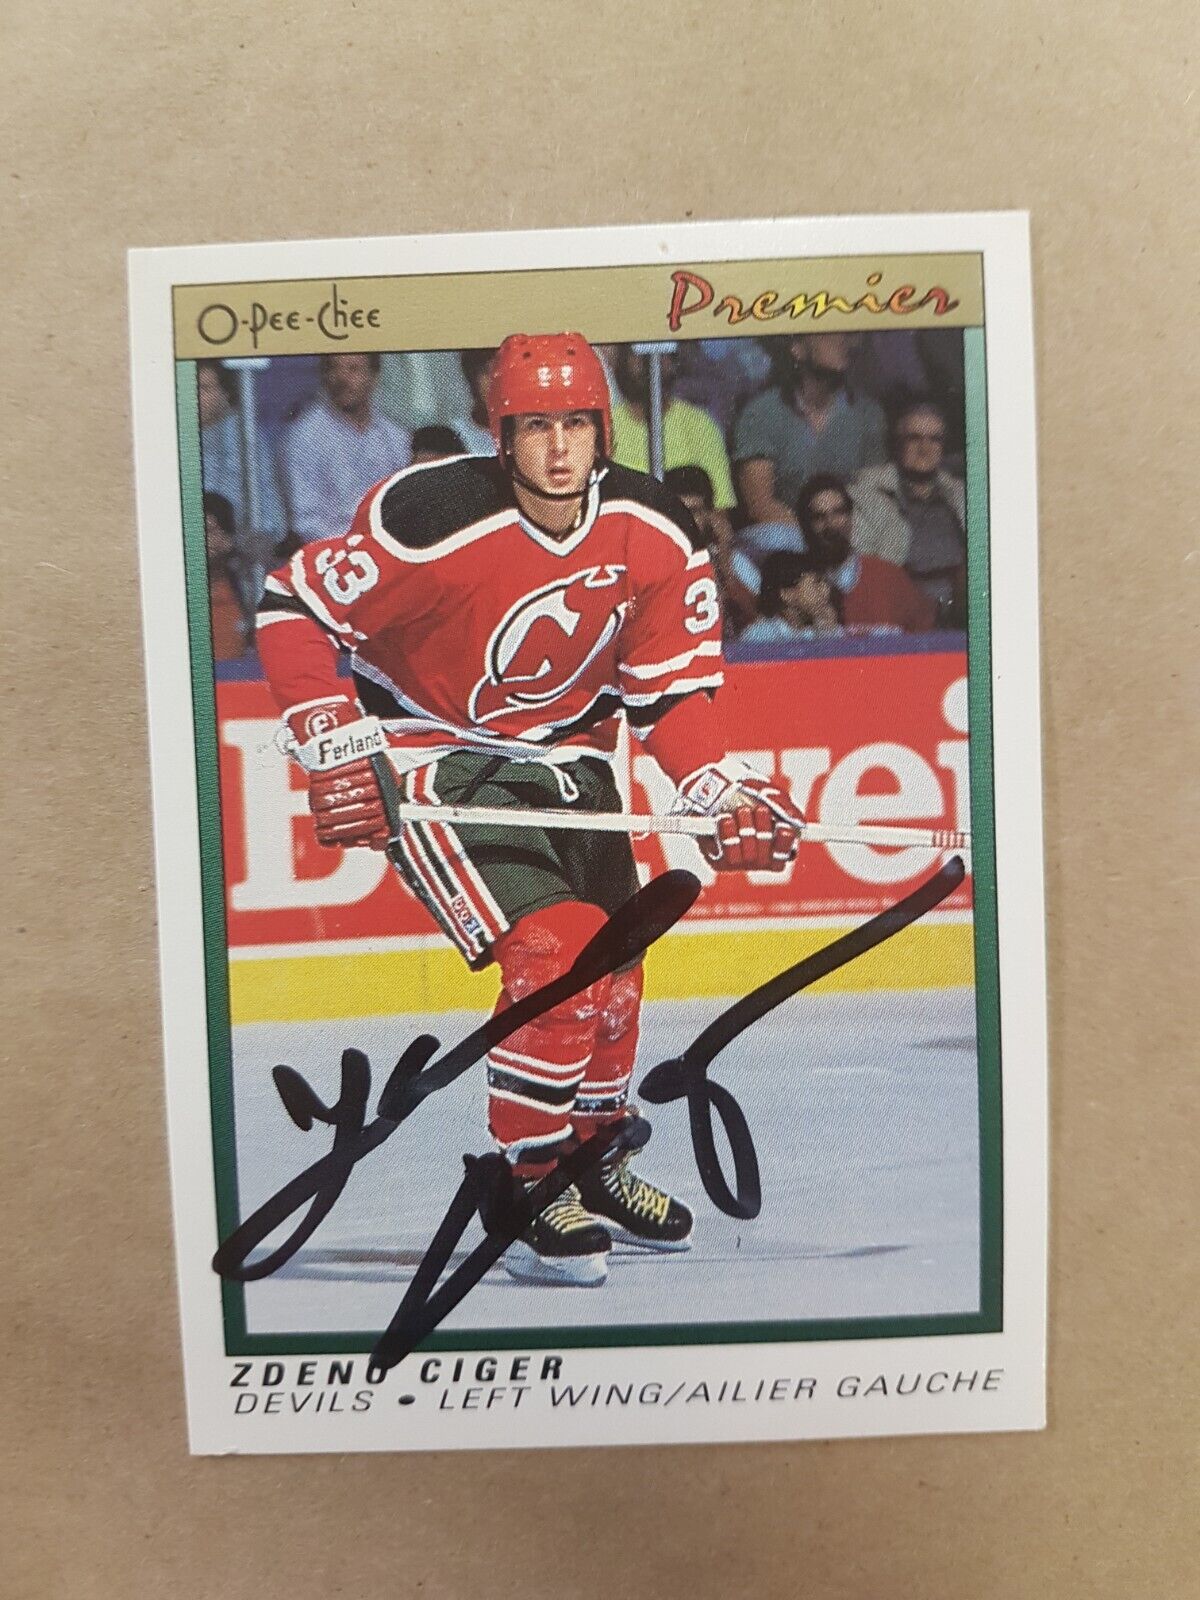 Zdeno Ciger OPC Premier Autograph Card Signed Hockey 15 1991